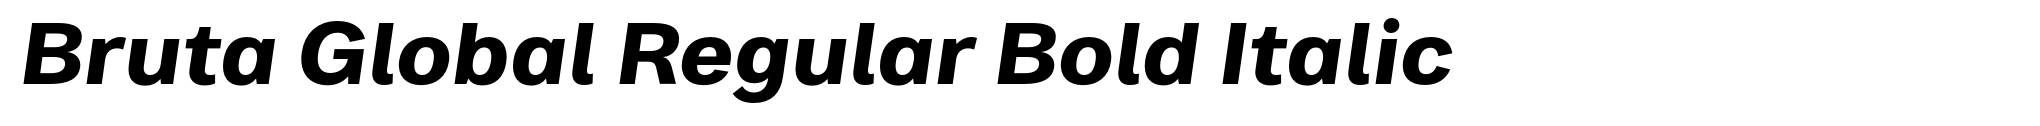 Bruta Global Regular Bold Italic image